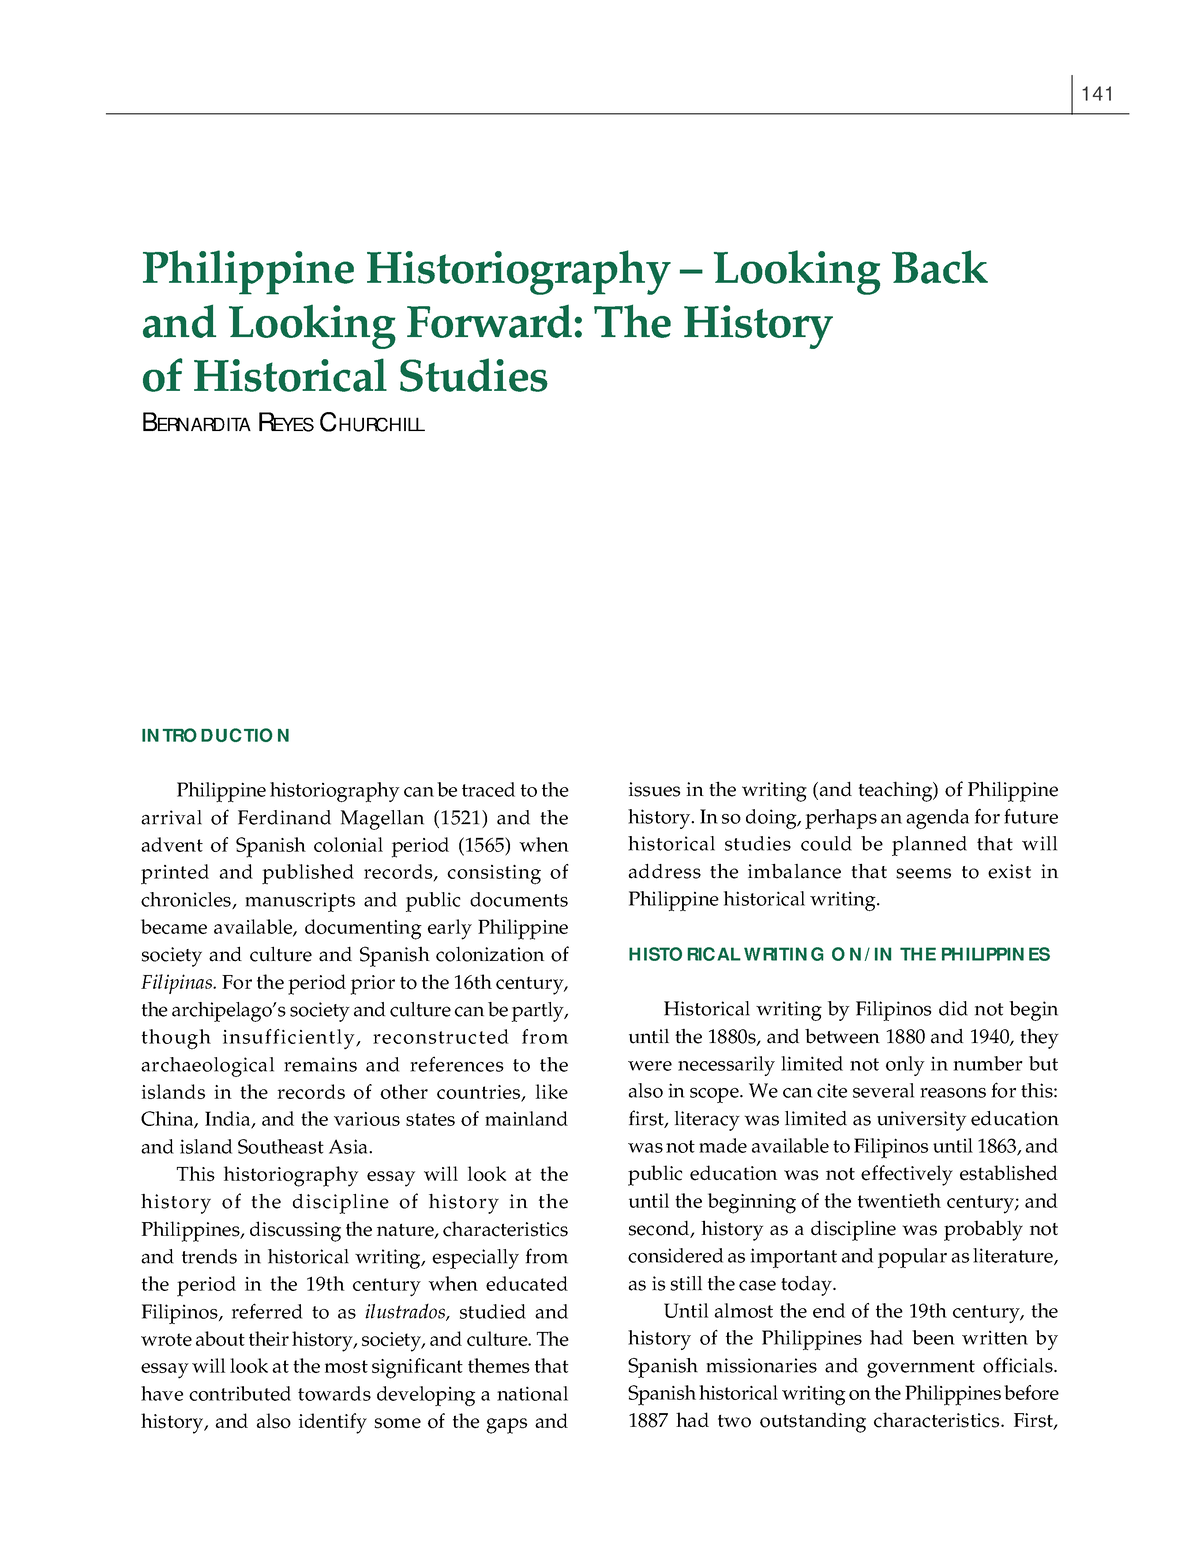 philippine historiography essay